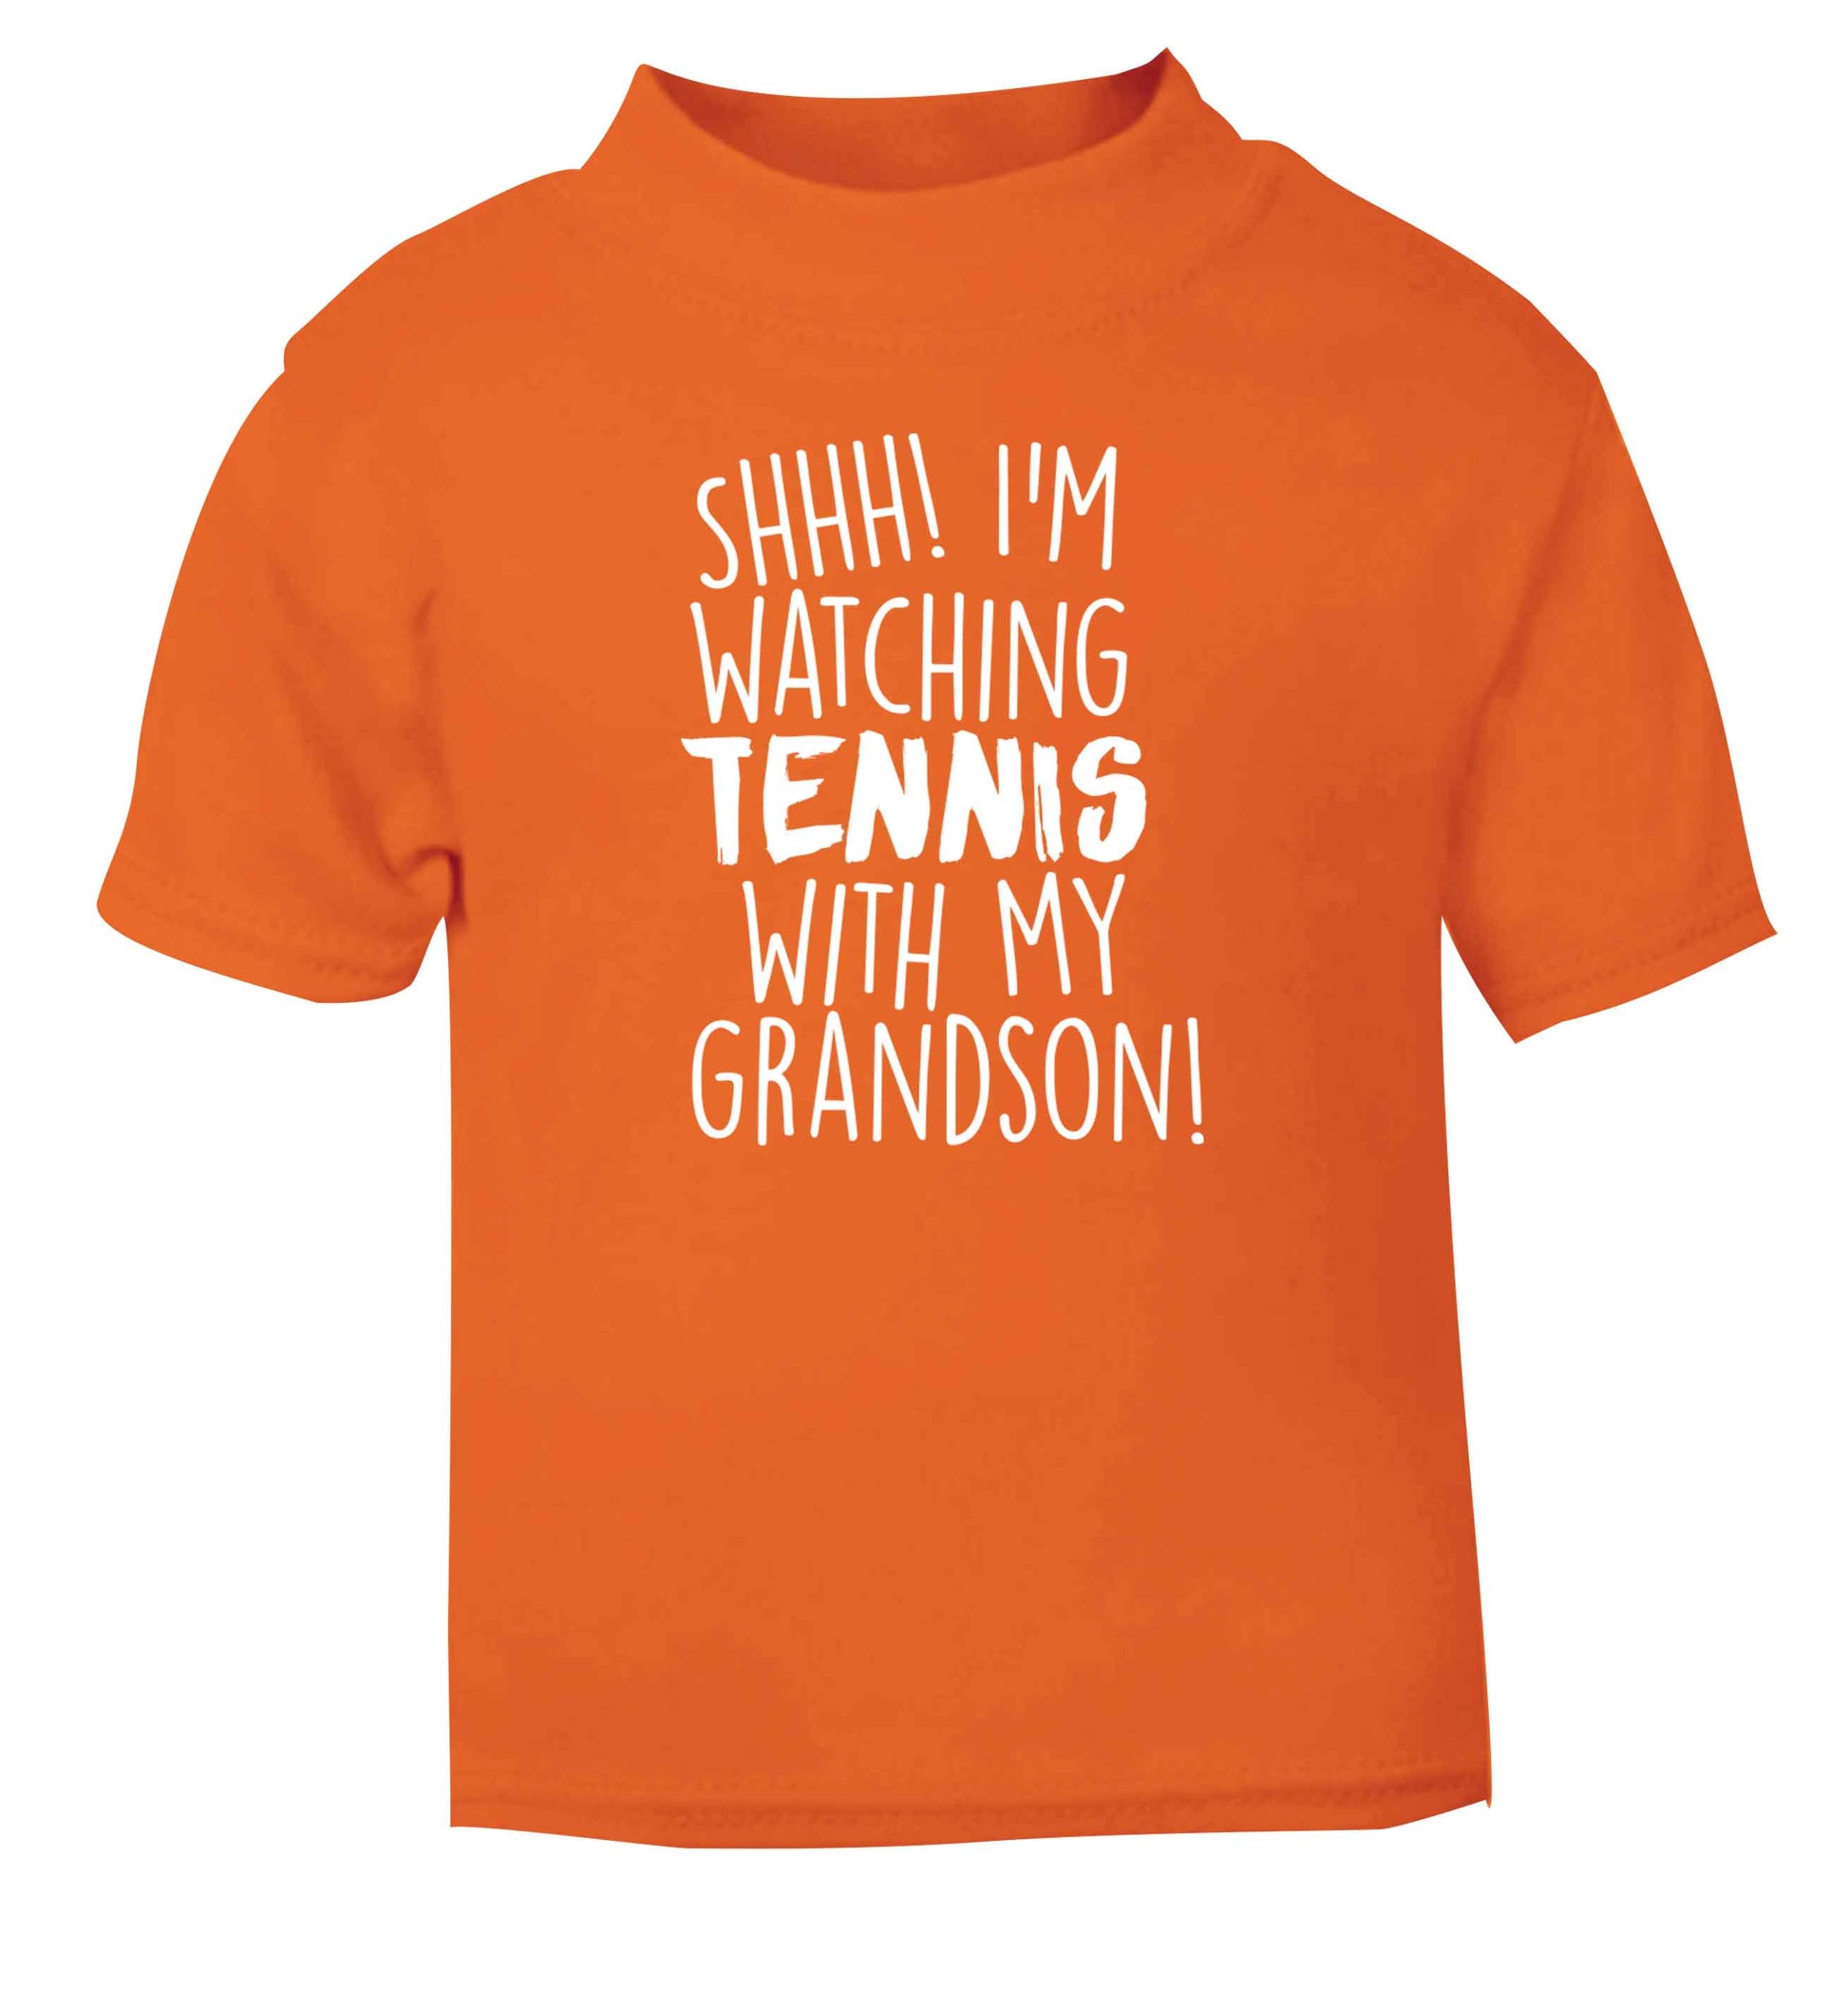 Shh! I'm watching tennis with my grandson! orange Baby Toddler Tshirt 2 Years